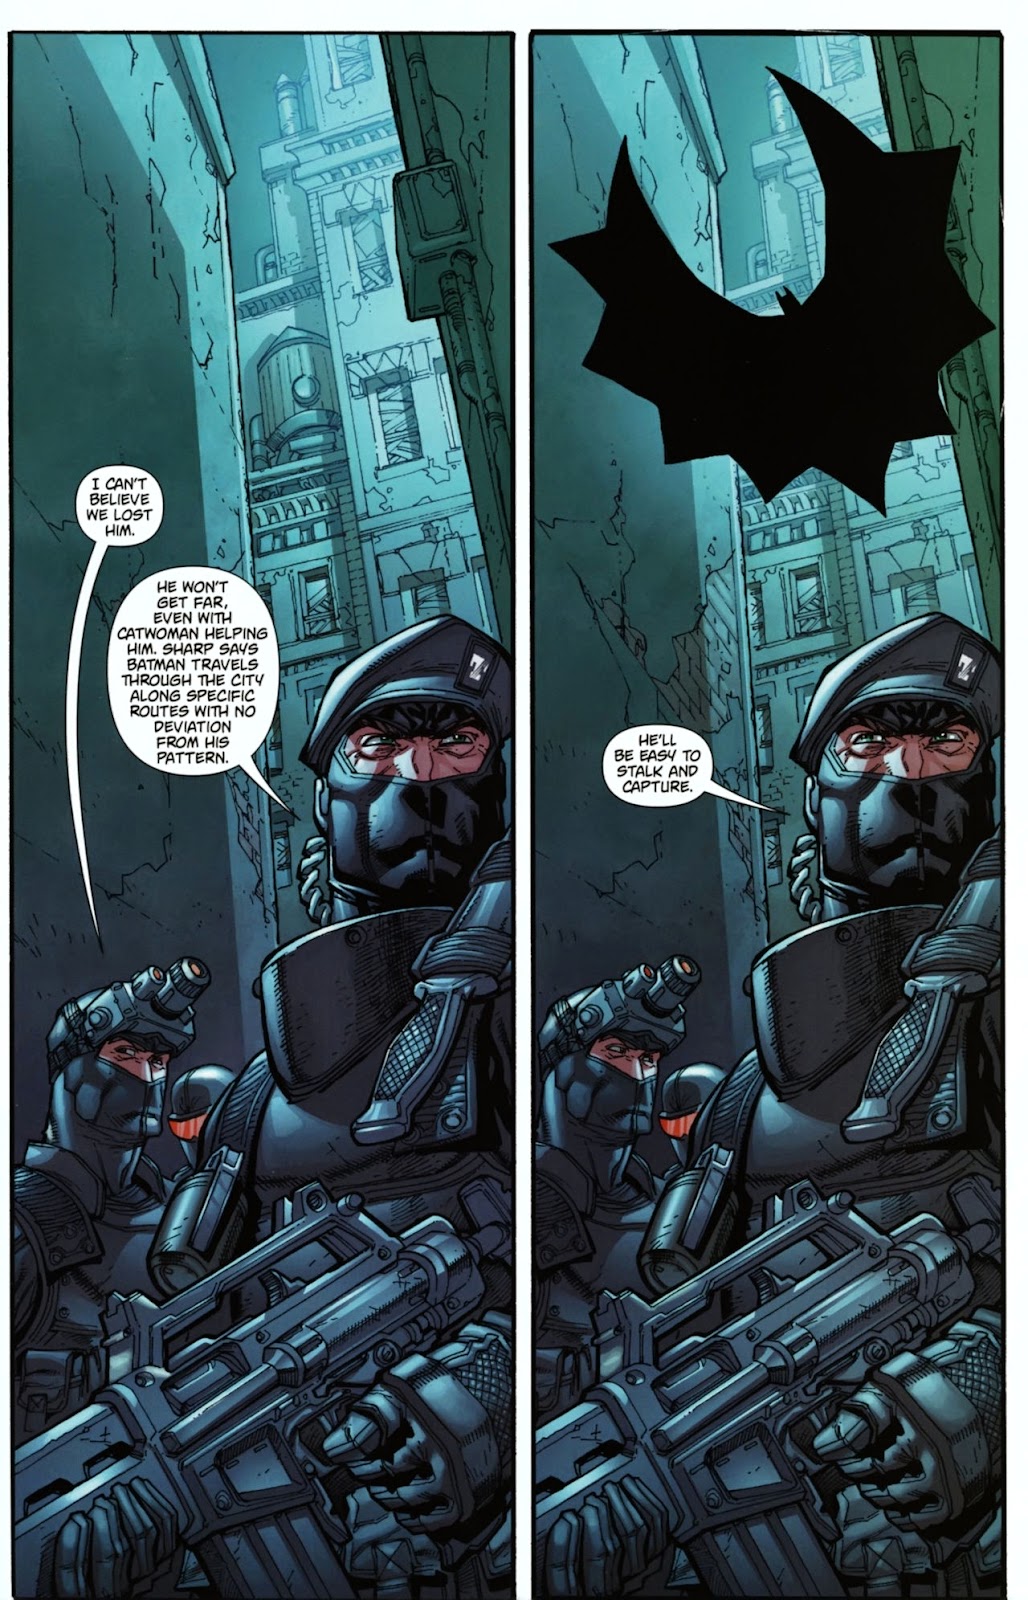 Batman Arkham City Issue 4 Read Batman Arkham City Issue